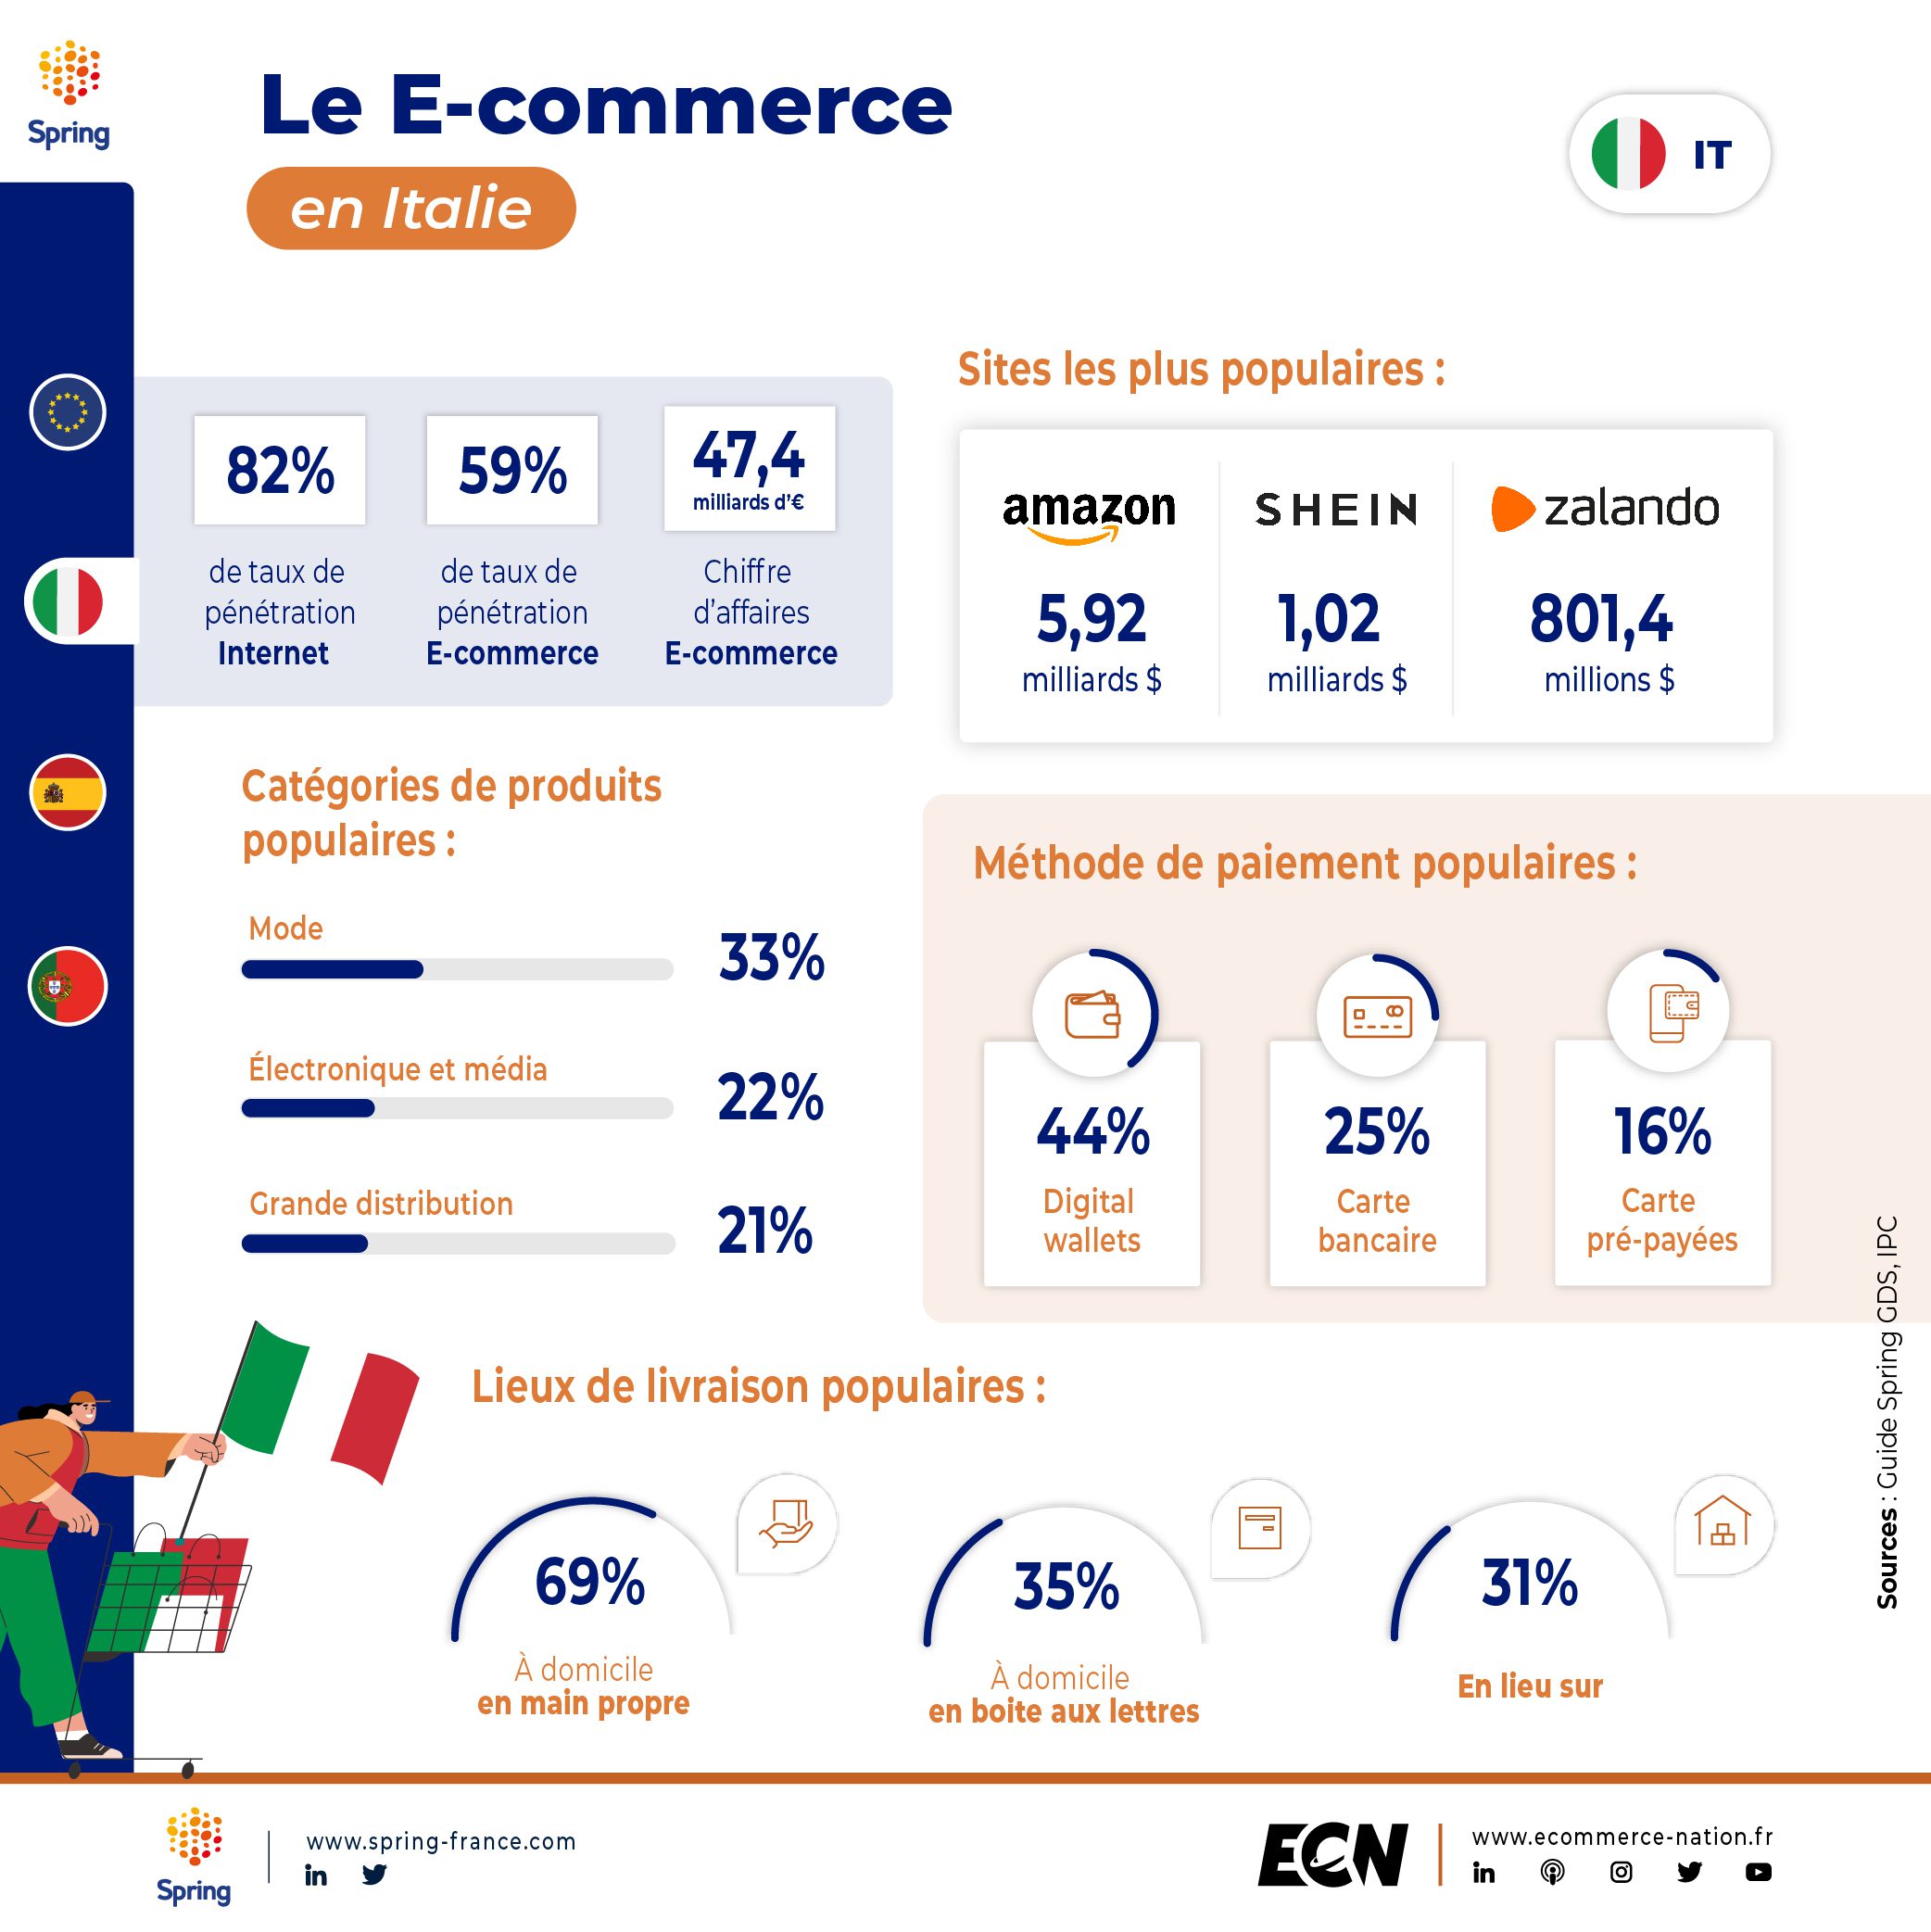 Le E-commerce en Italie